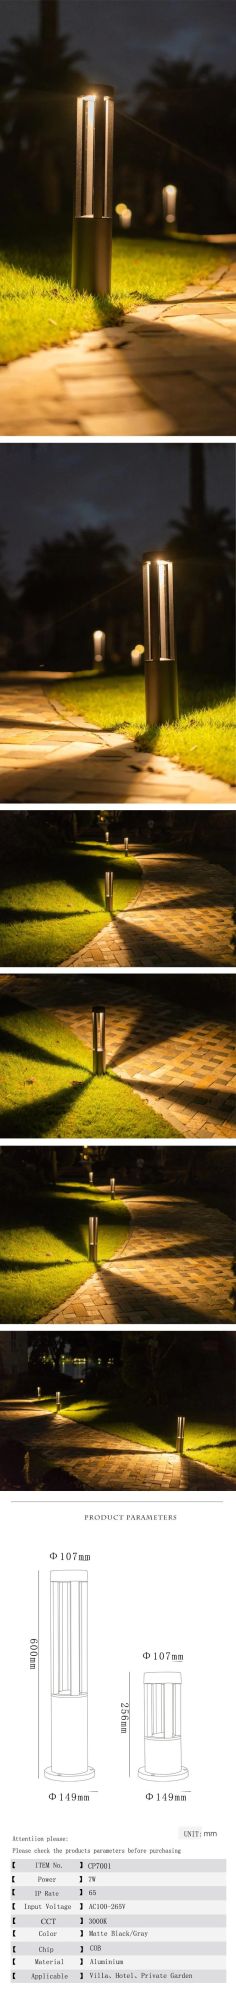 Electric RGB 3-5m LED Landscape Outdoor Garden String Lights Poles